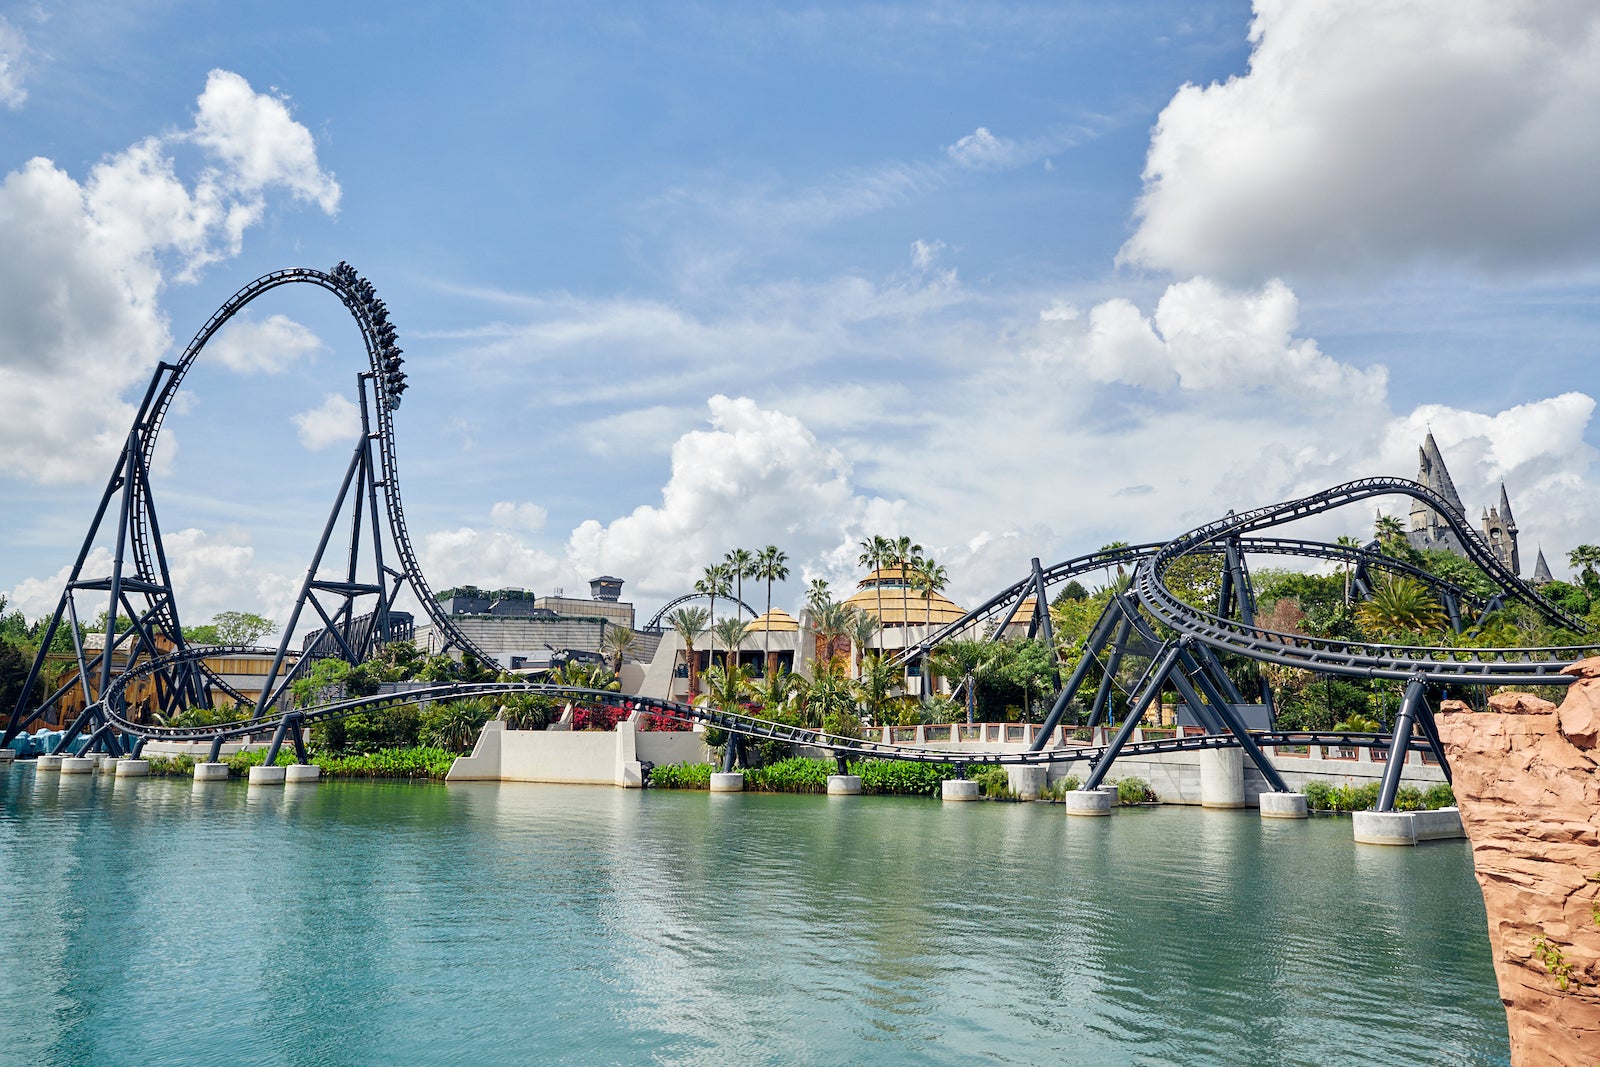 A rollercoaster at Universal Orlando Resort